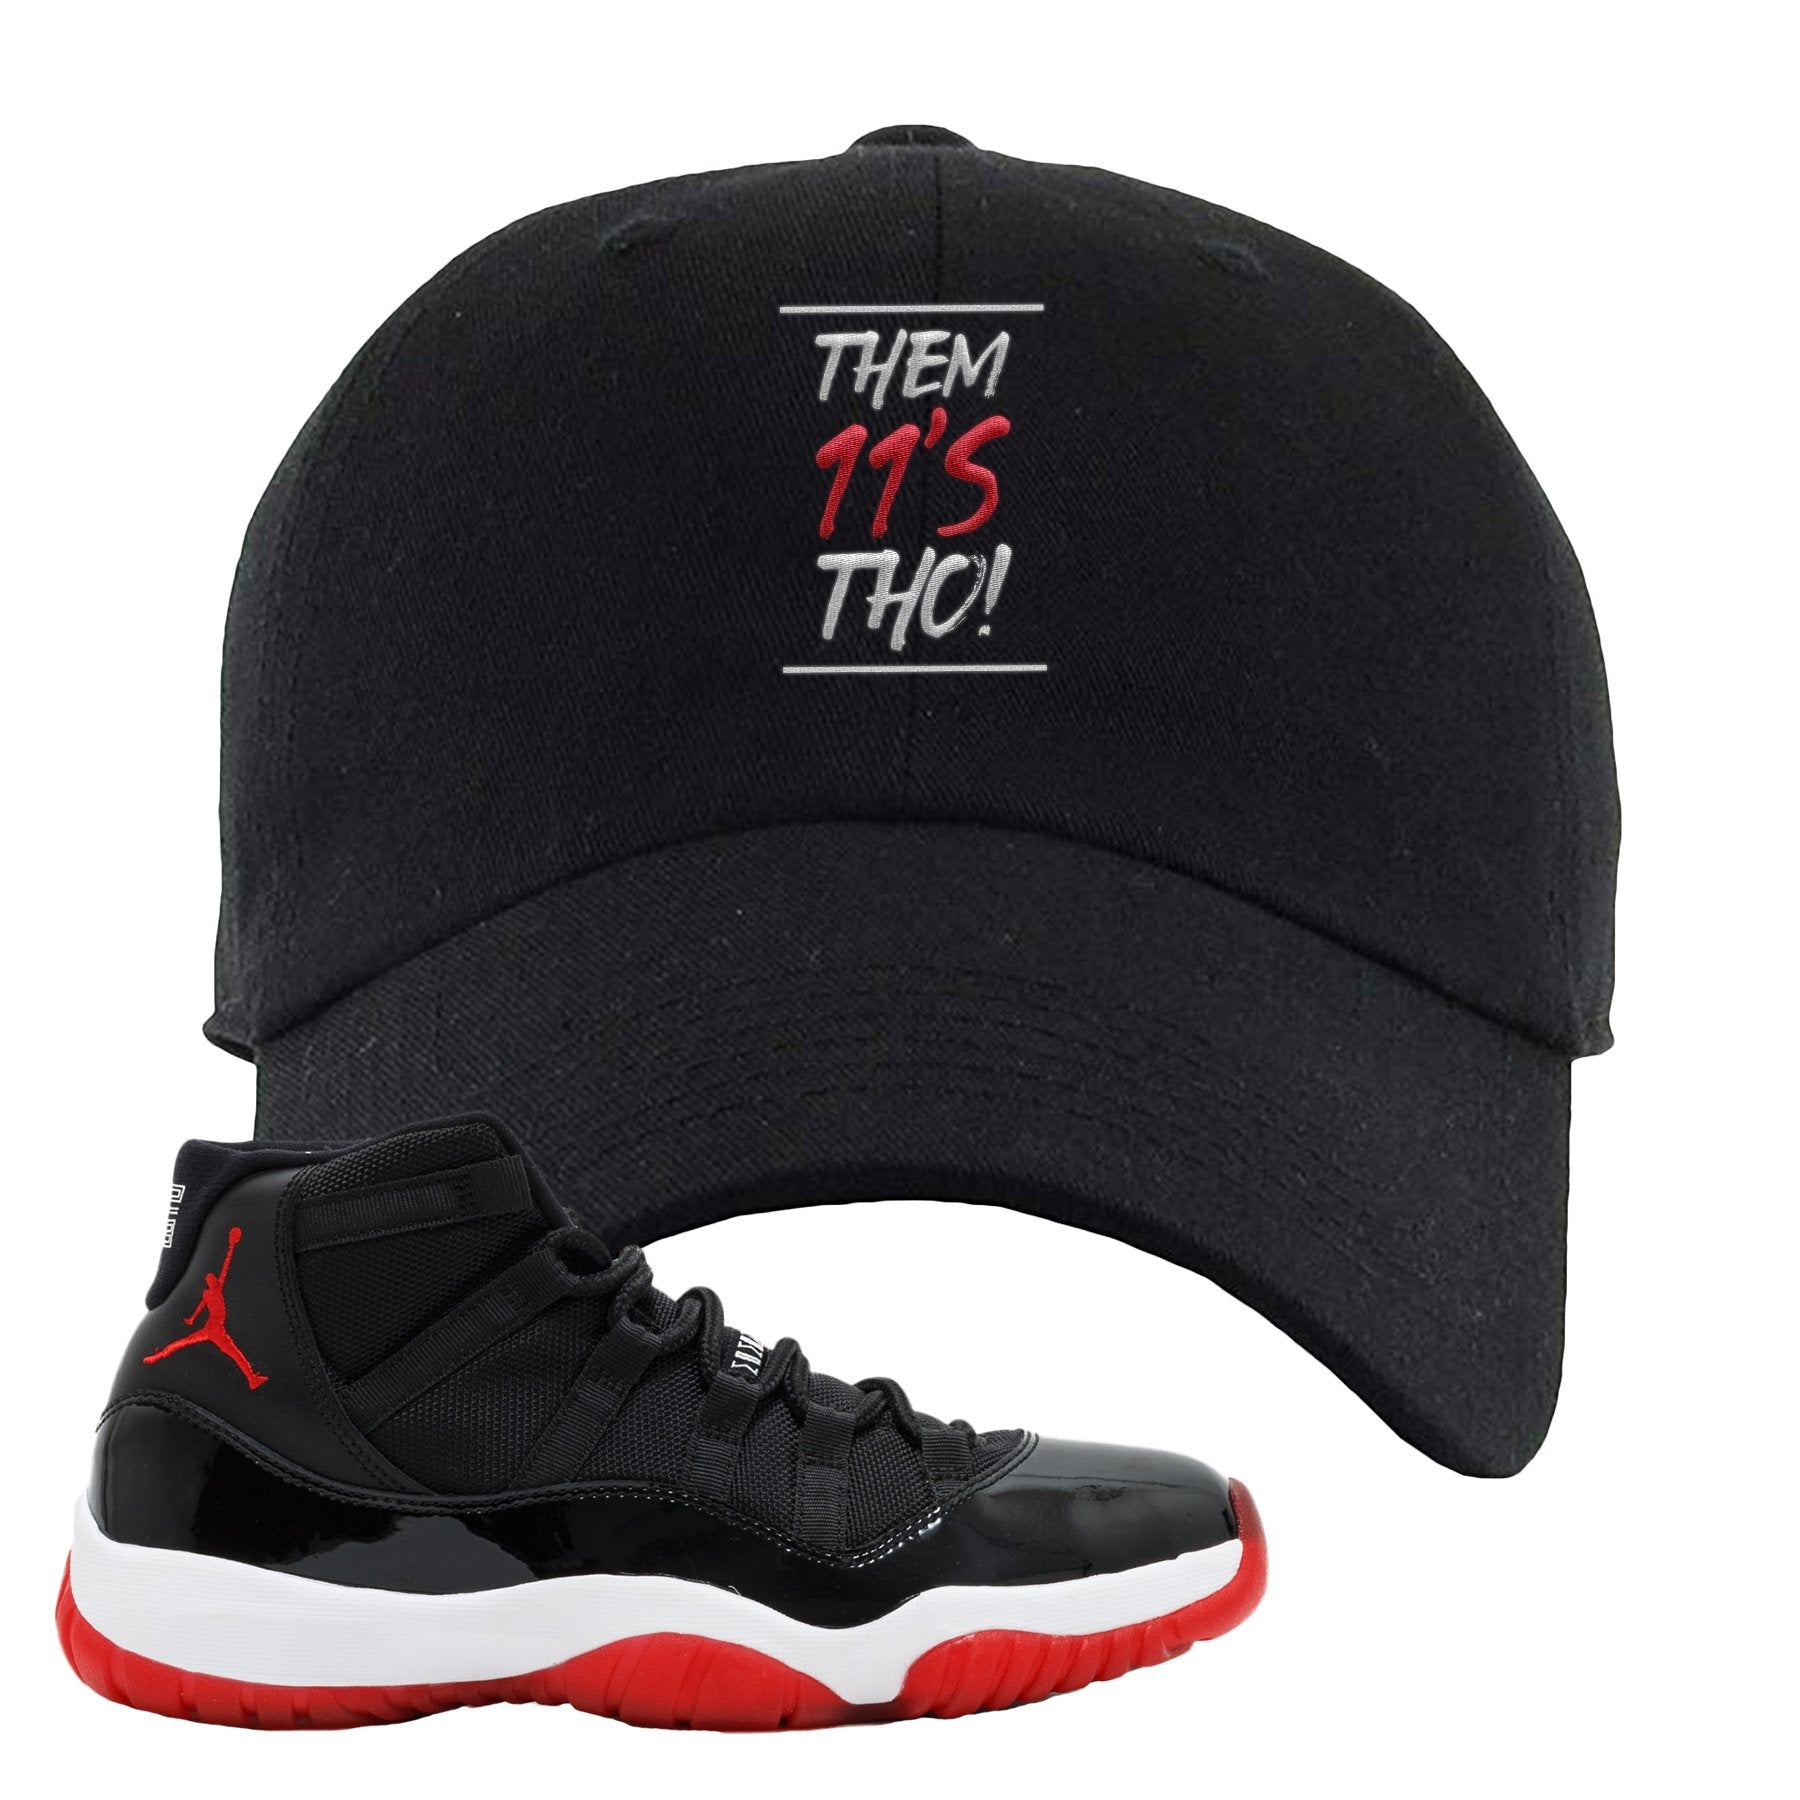 Jordan 11 Bred Them 11s Tho! Black Sneaker Hook Up Dad Hat